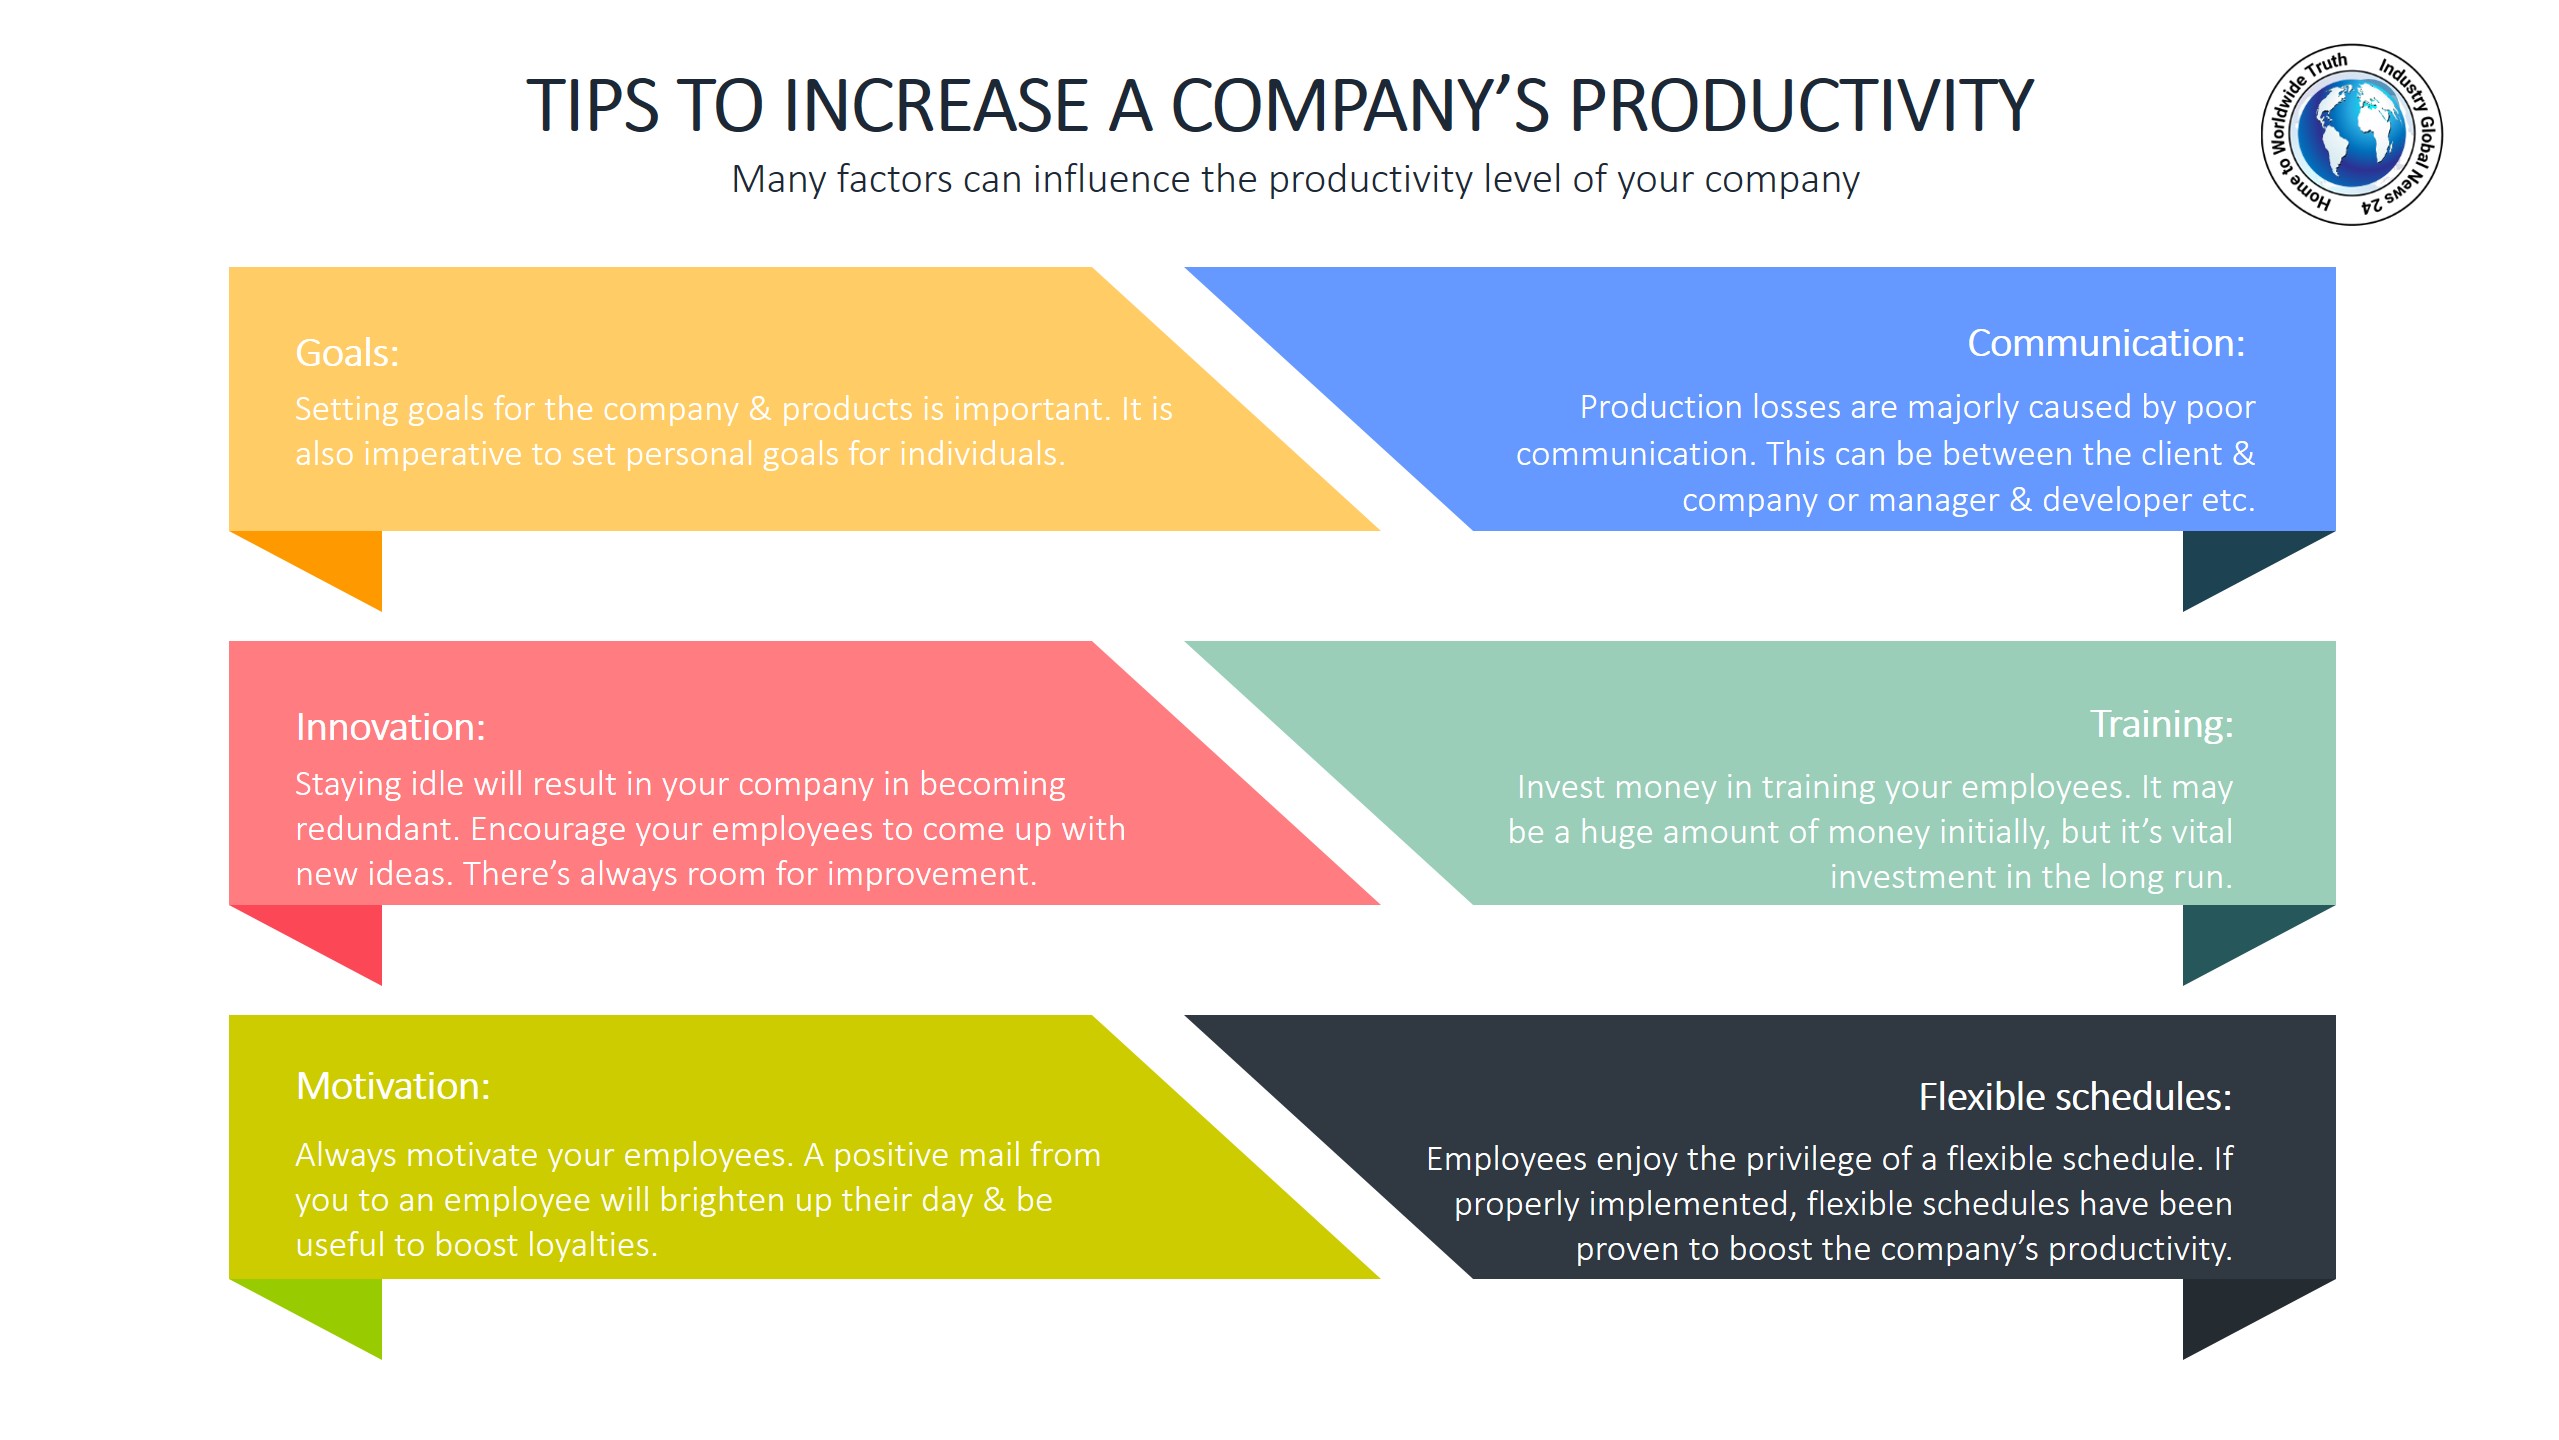 Tips to increase a company’s productivity